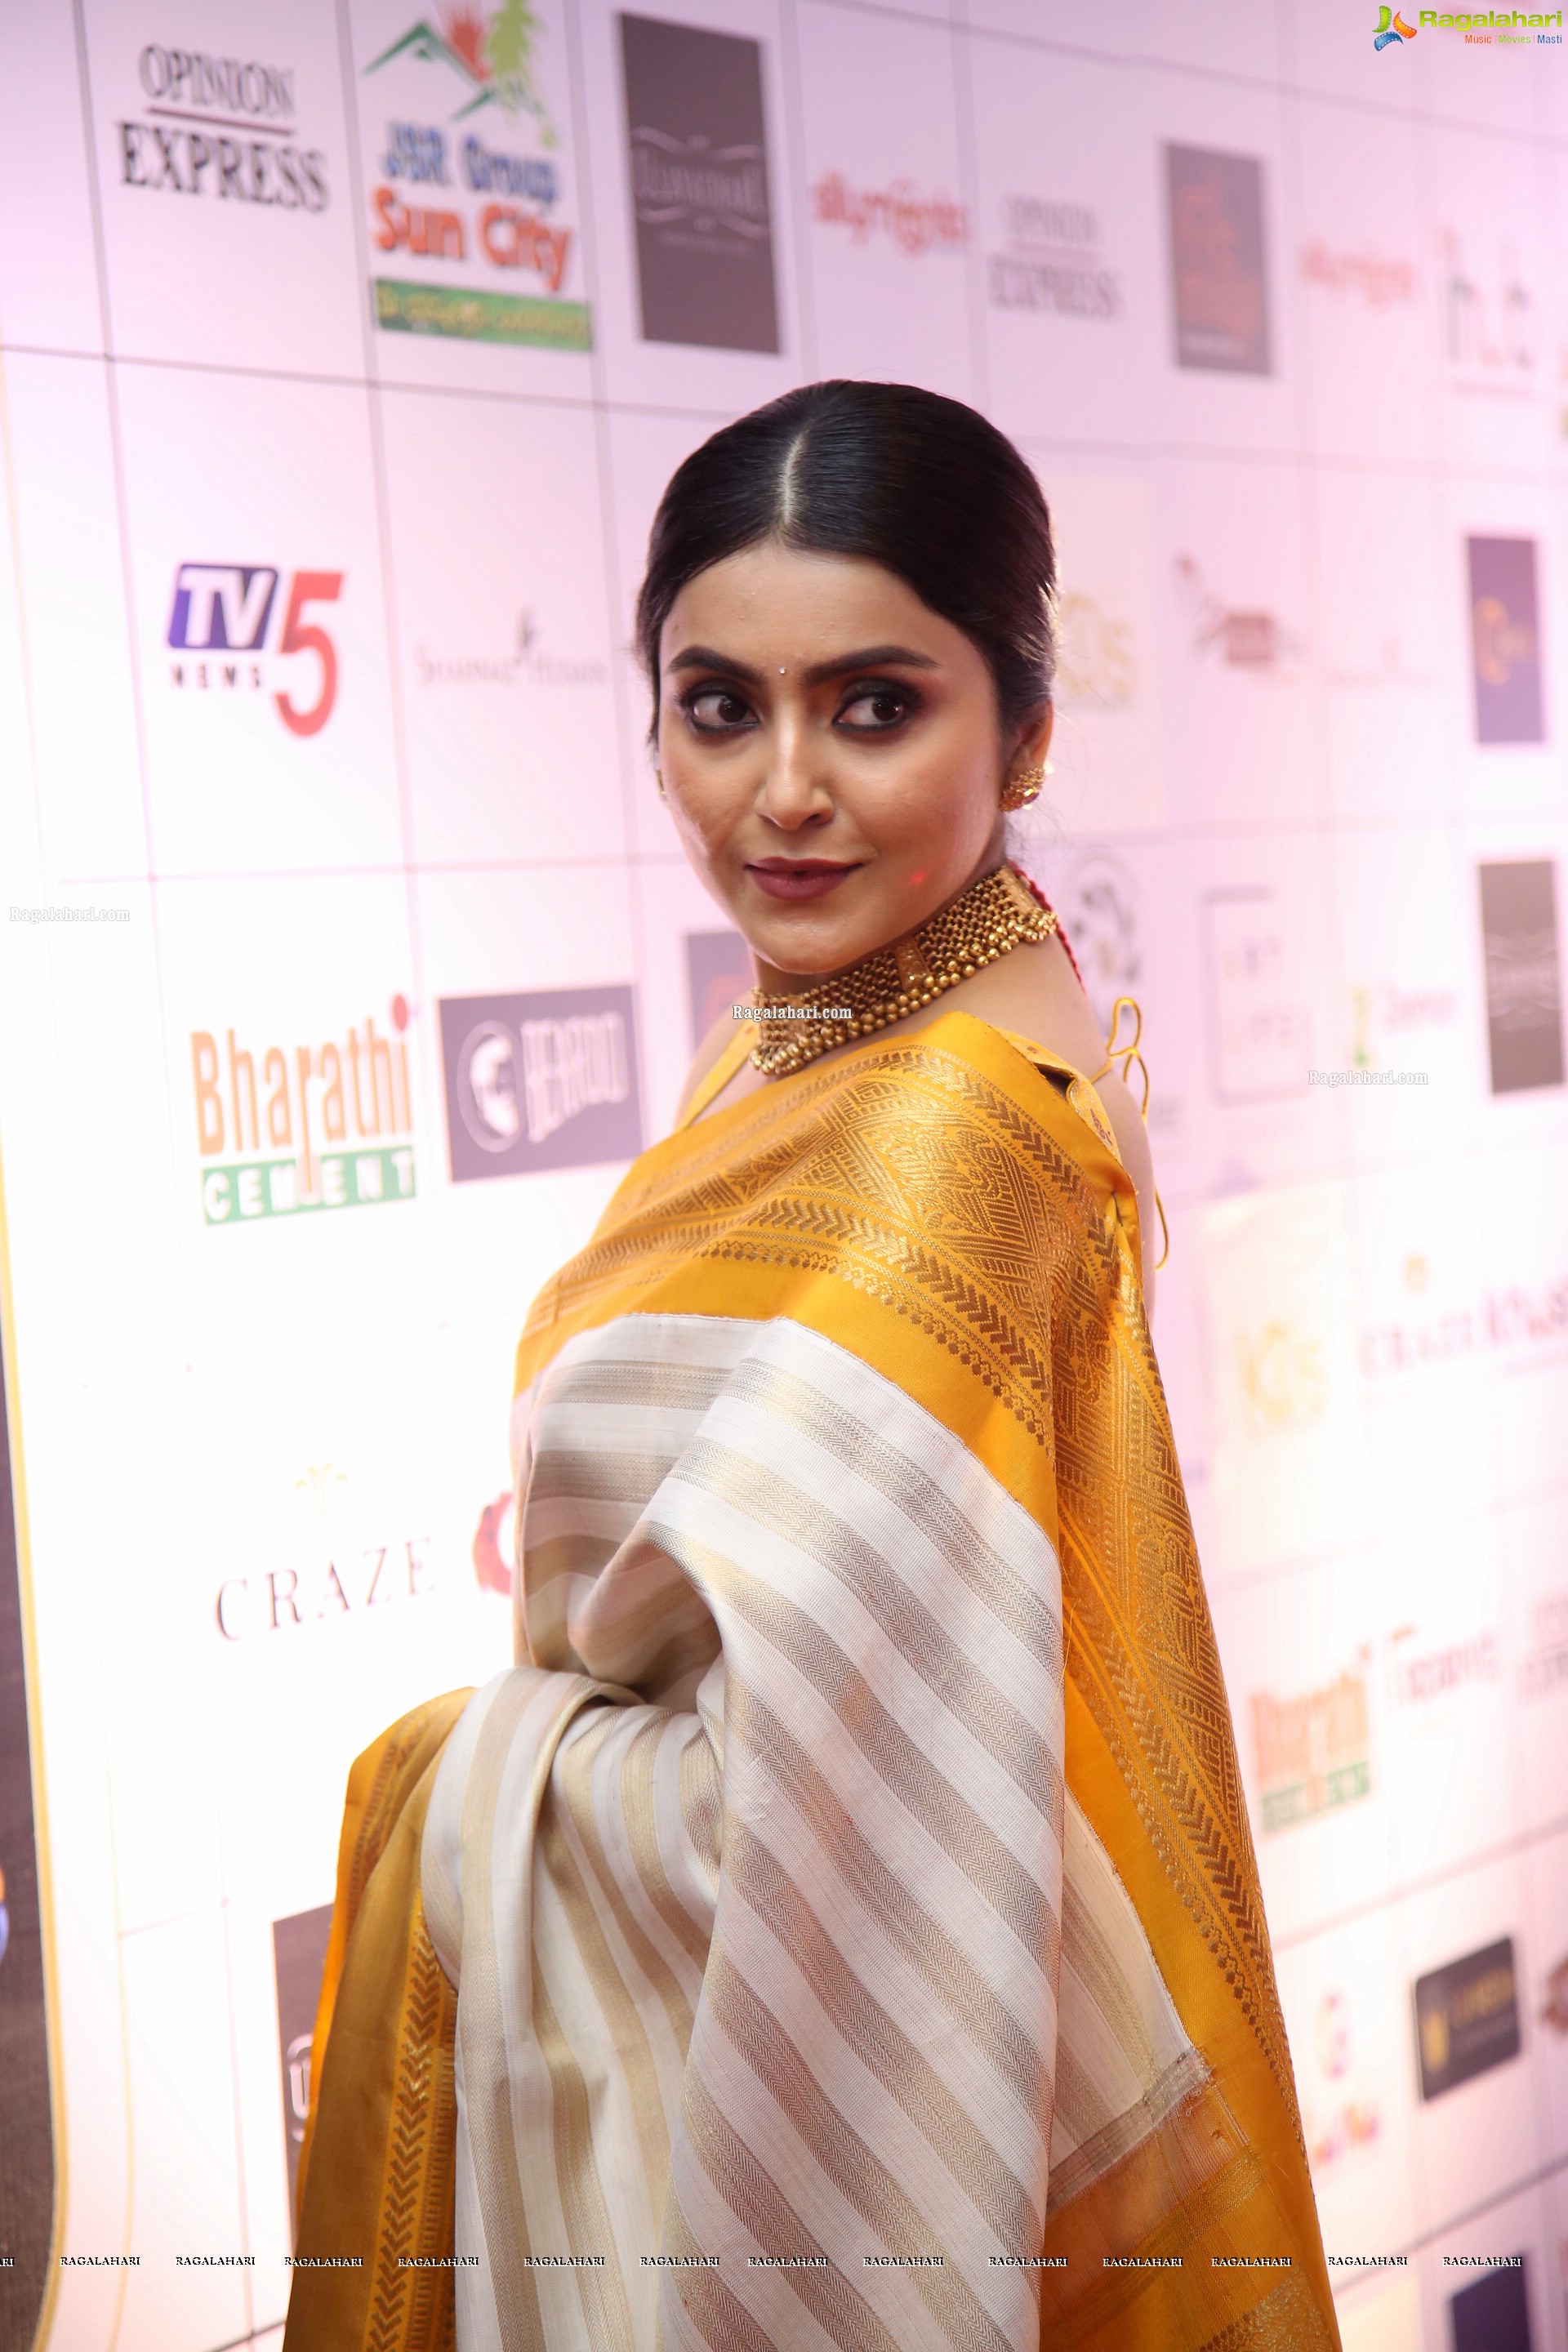 Avantika Mishra @ Dadasaheb Phalke Awards South 2019 - HD Gallery